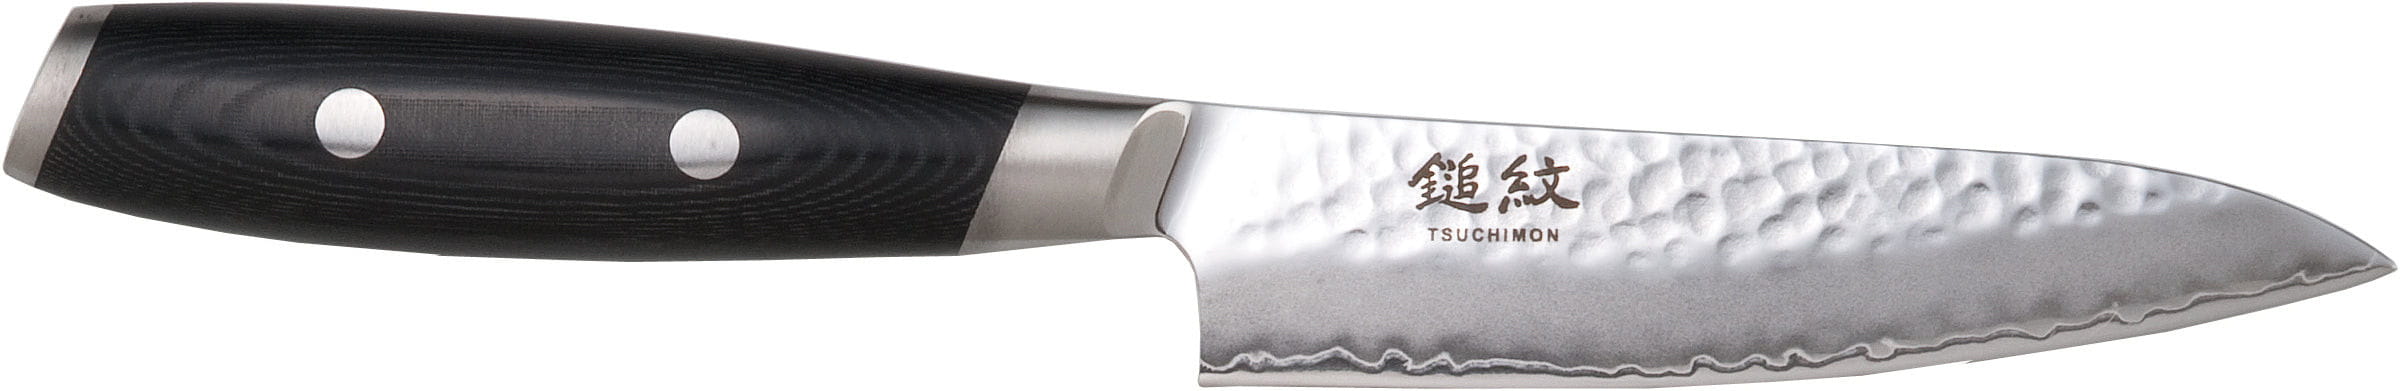 Cuchillo universal de Yaxell Tsuchimon, 12 cm